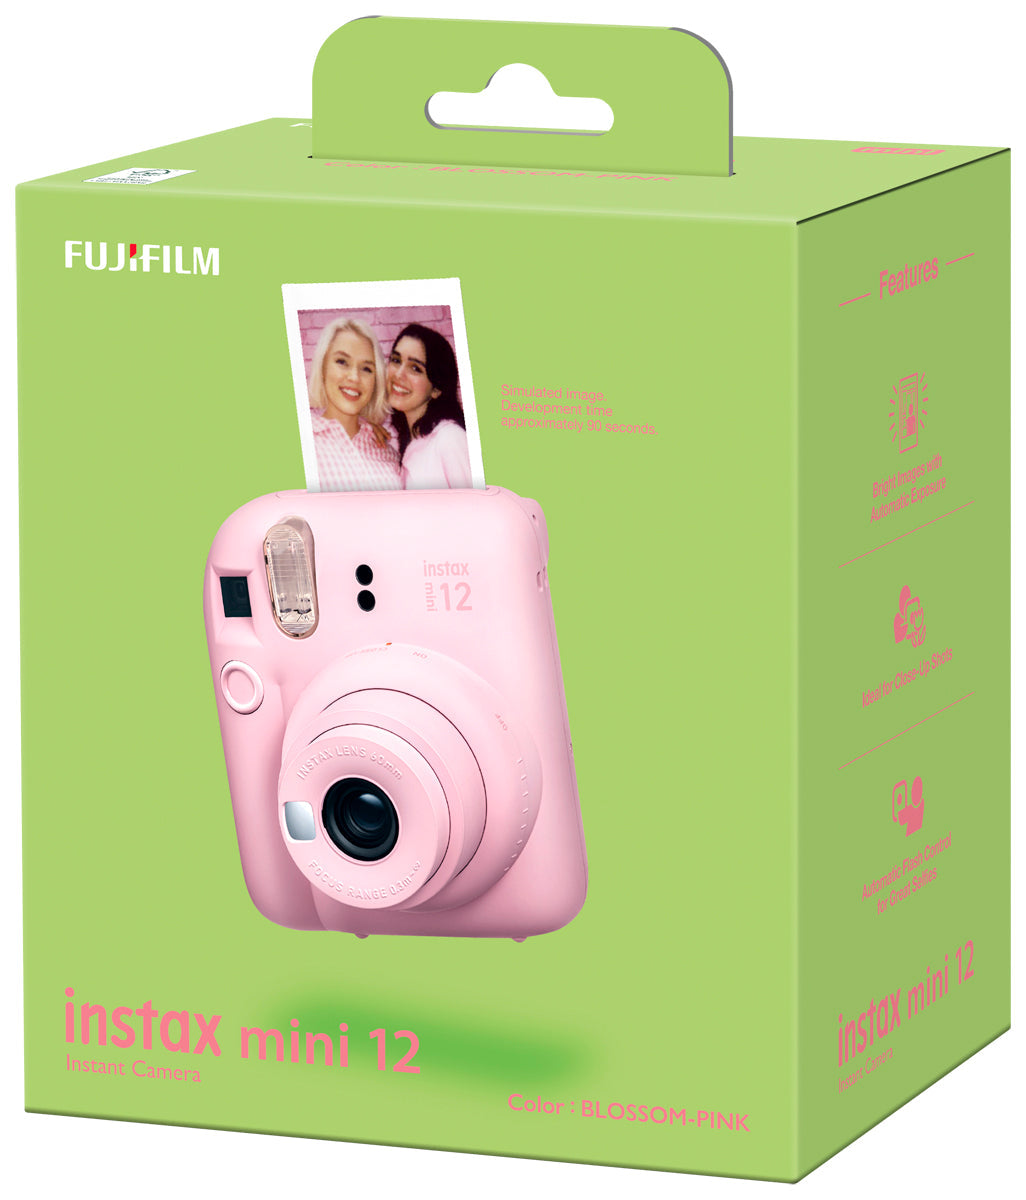 Fujifilm Instax Mini 12 Album, Blossom Pink